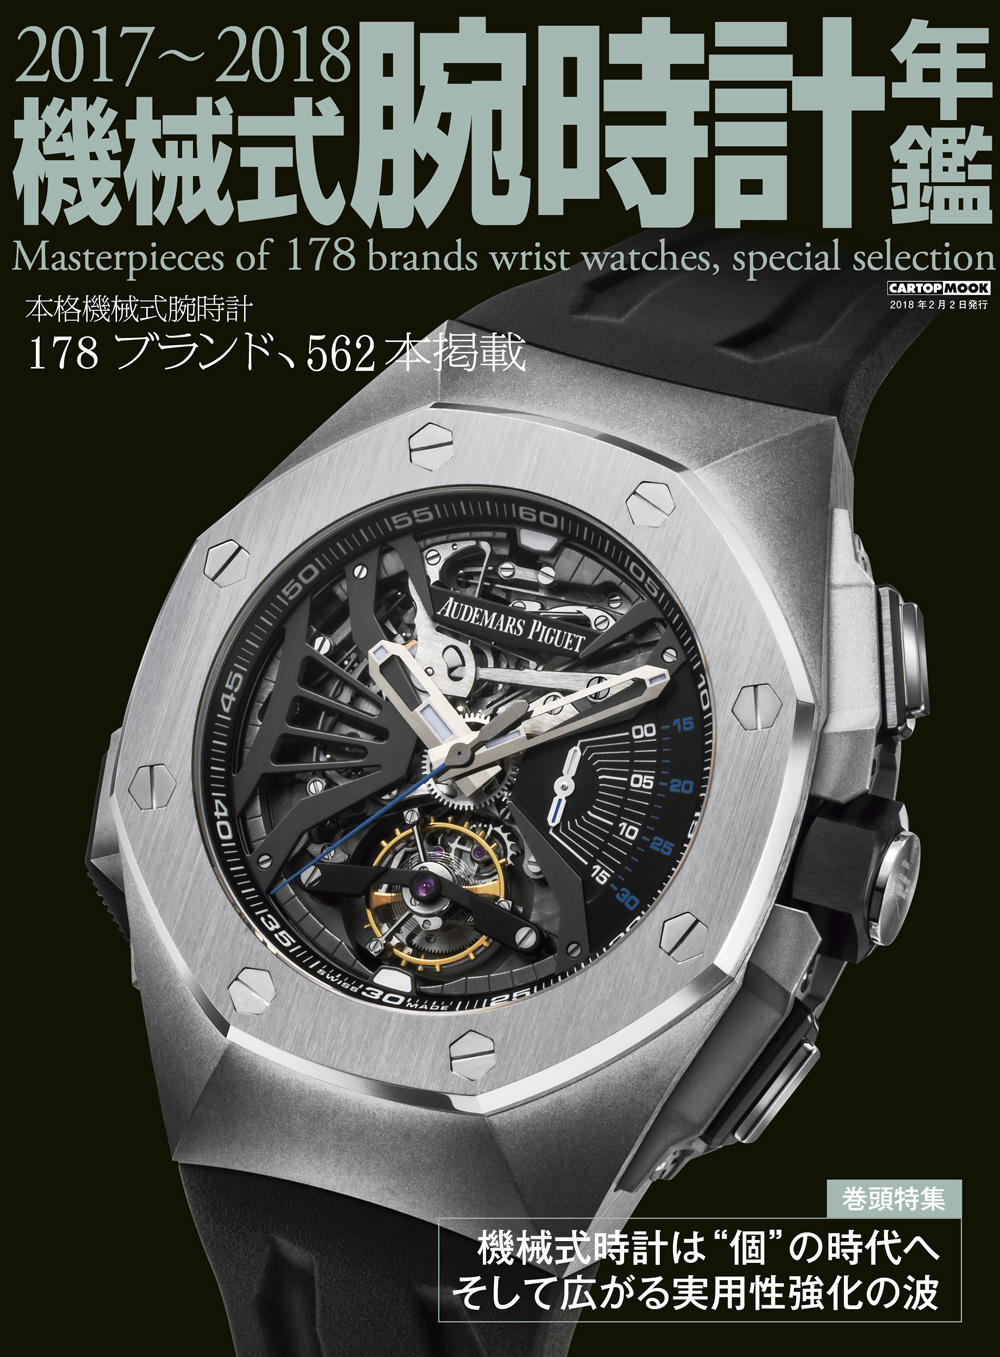 C's-Factory｜電子書籍｜2017～2018機械式腕時計年鑑